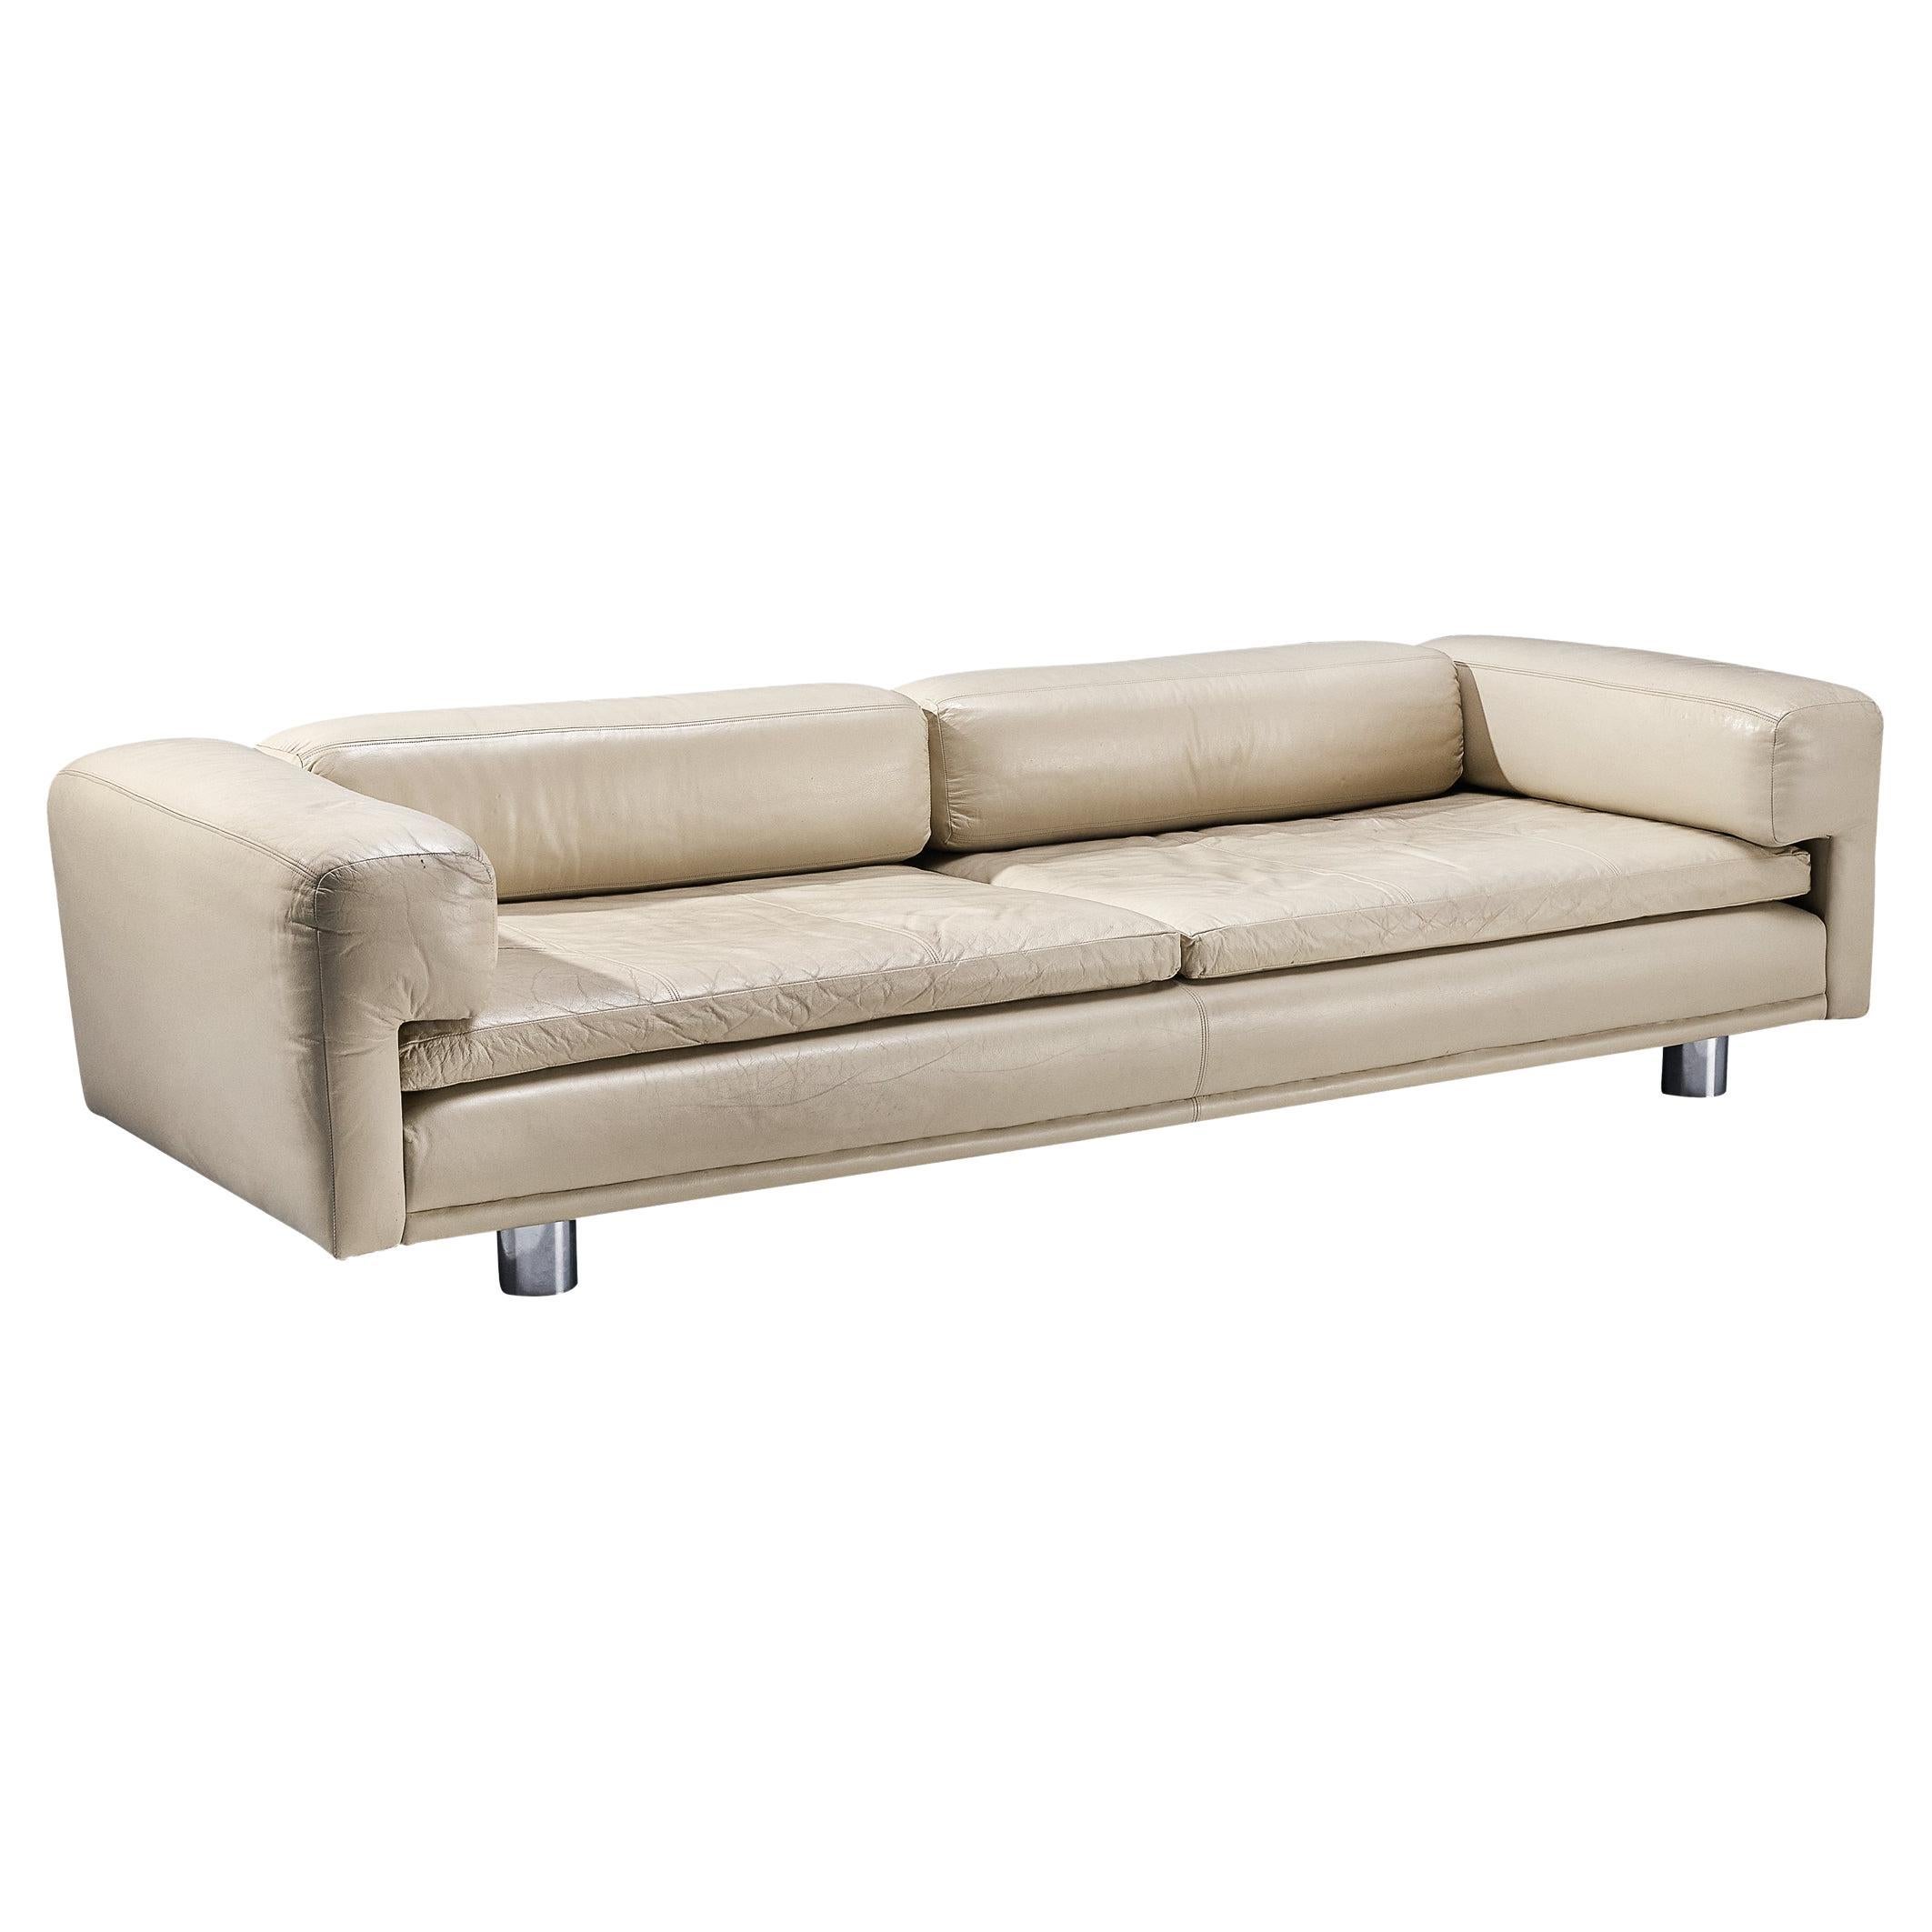 Howard Keith 'Diplomat' Sofa in Beige Leather 